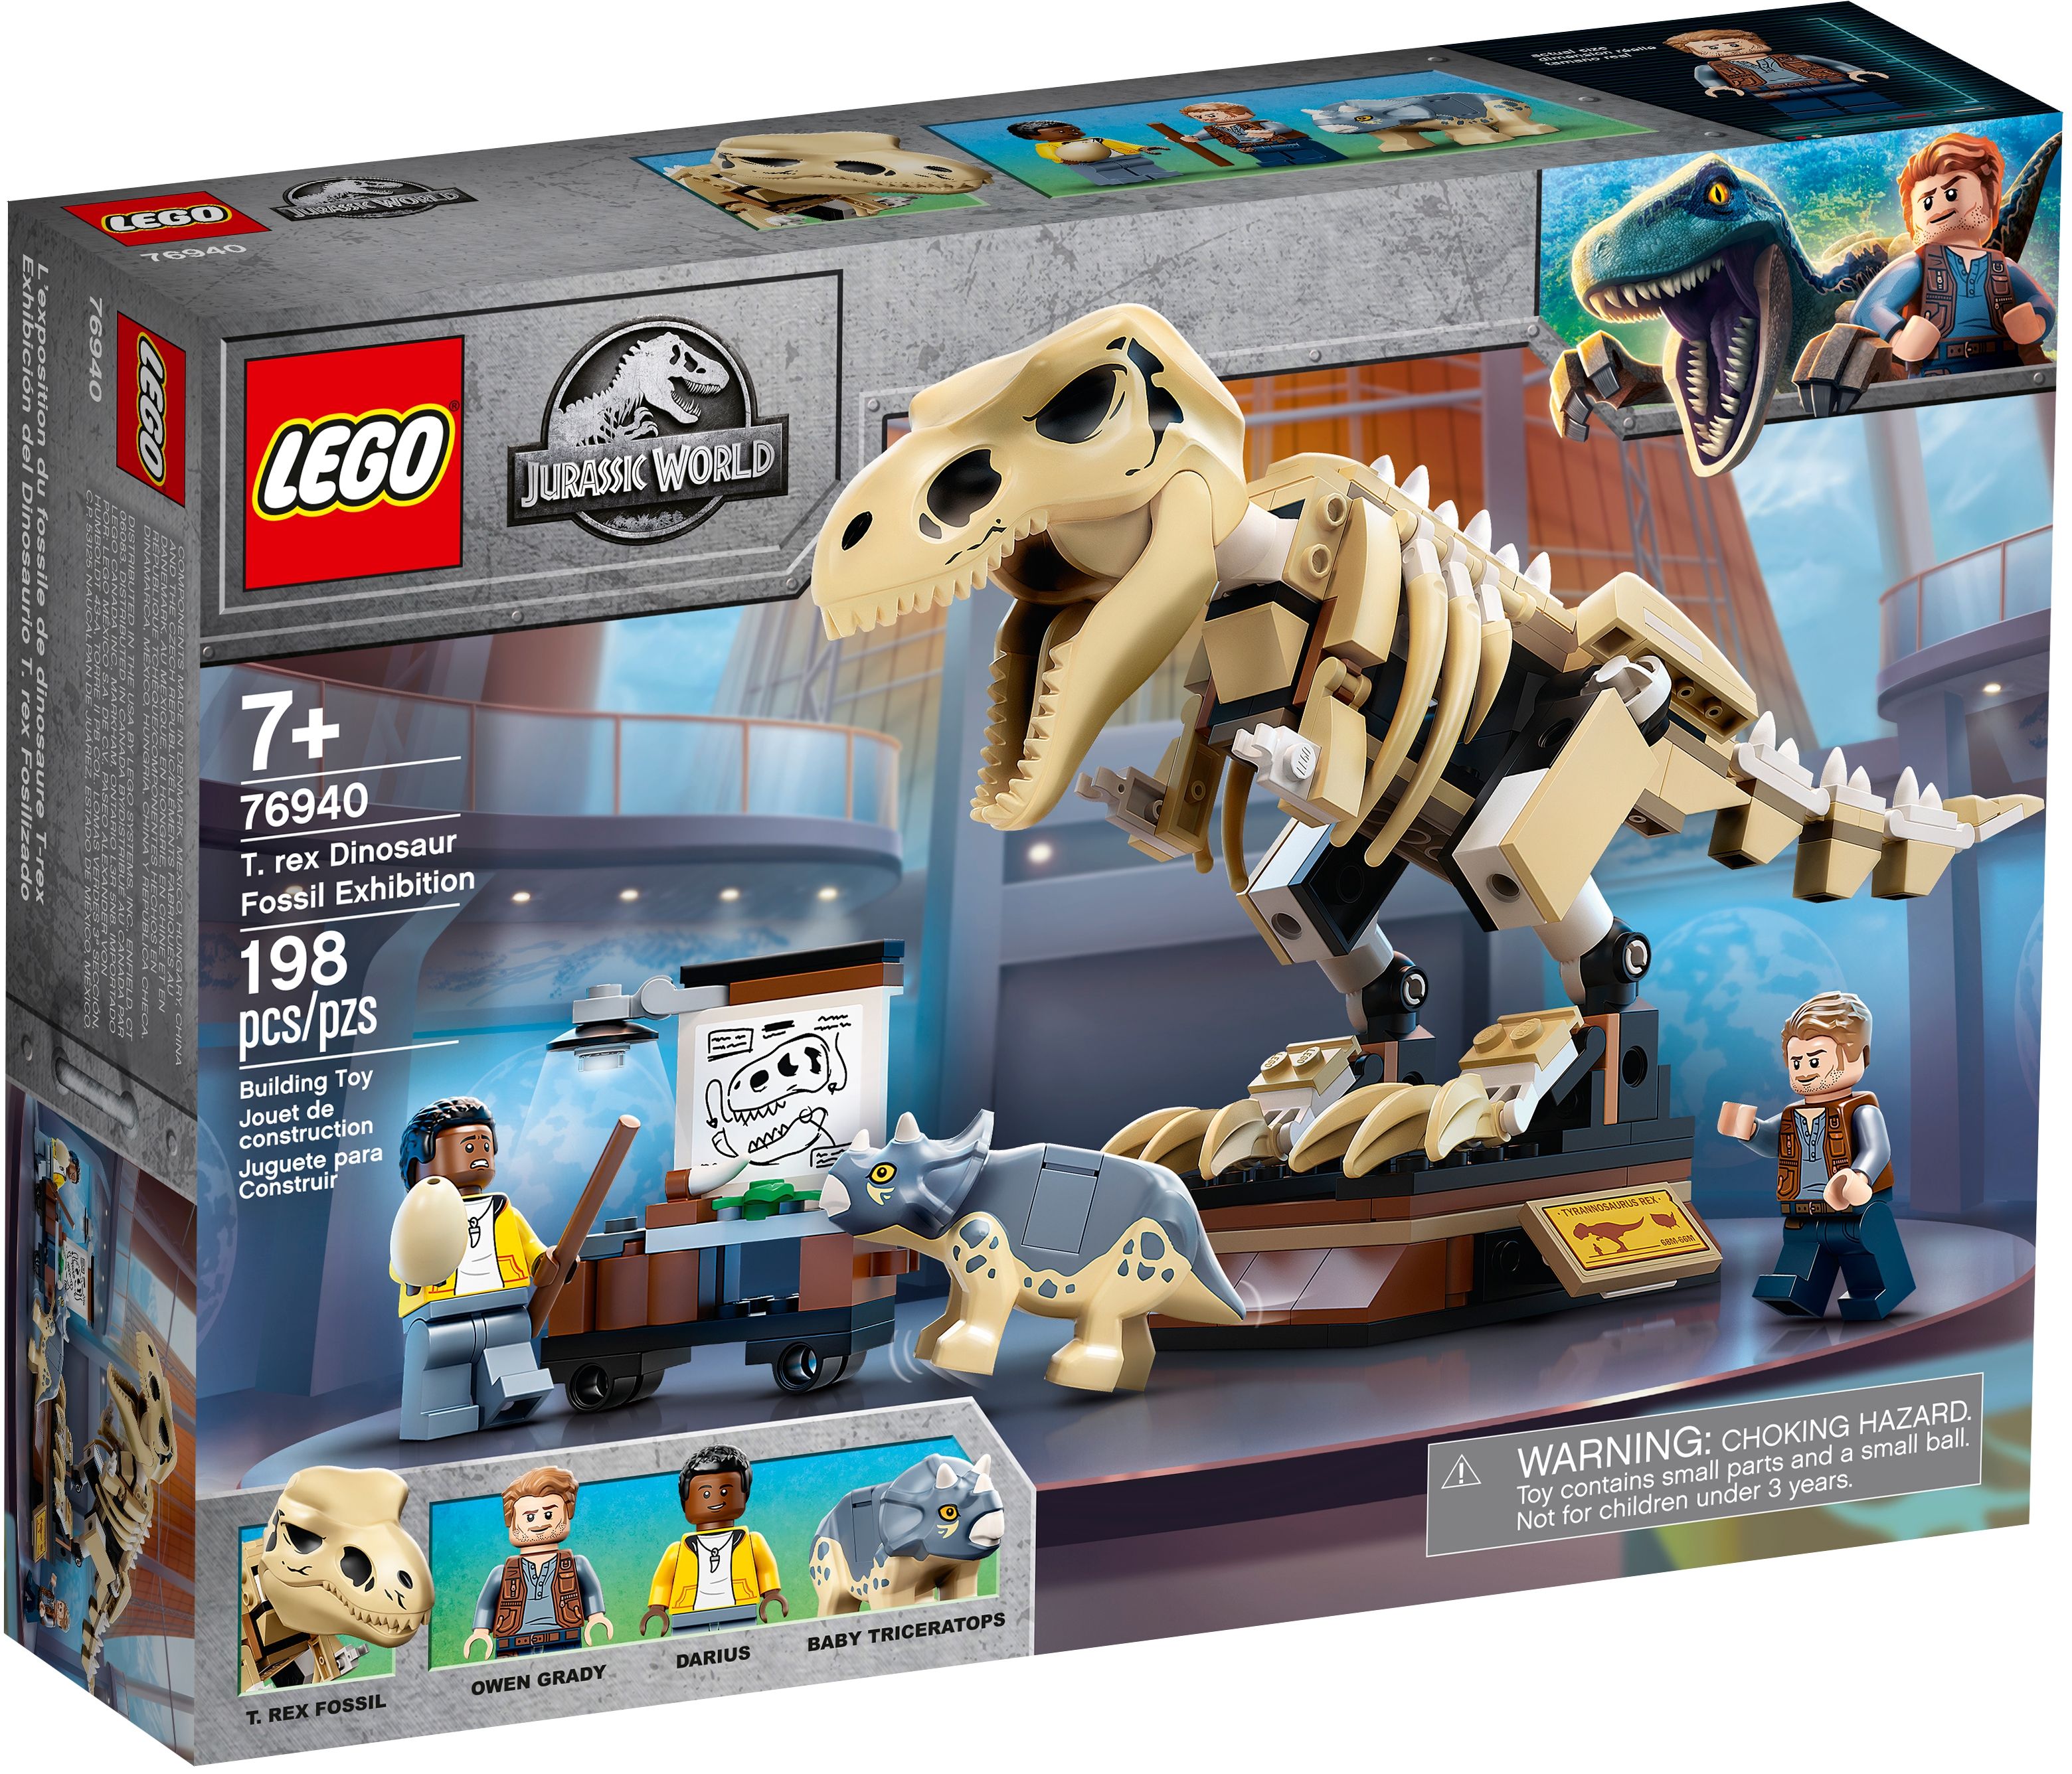 LEGO Jurassic World 76940 T. Rex-Skelett in der Fossilienausstellung LEGO_76940_box1_v39.jpg